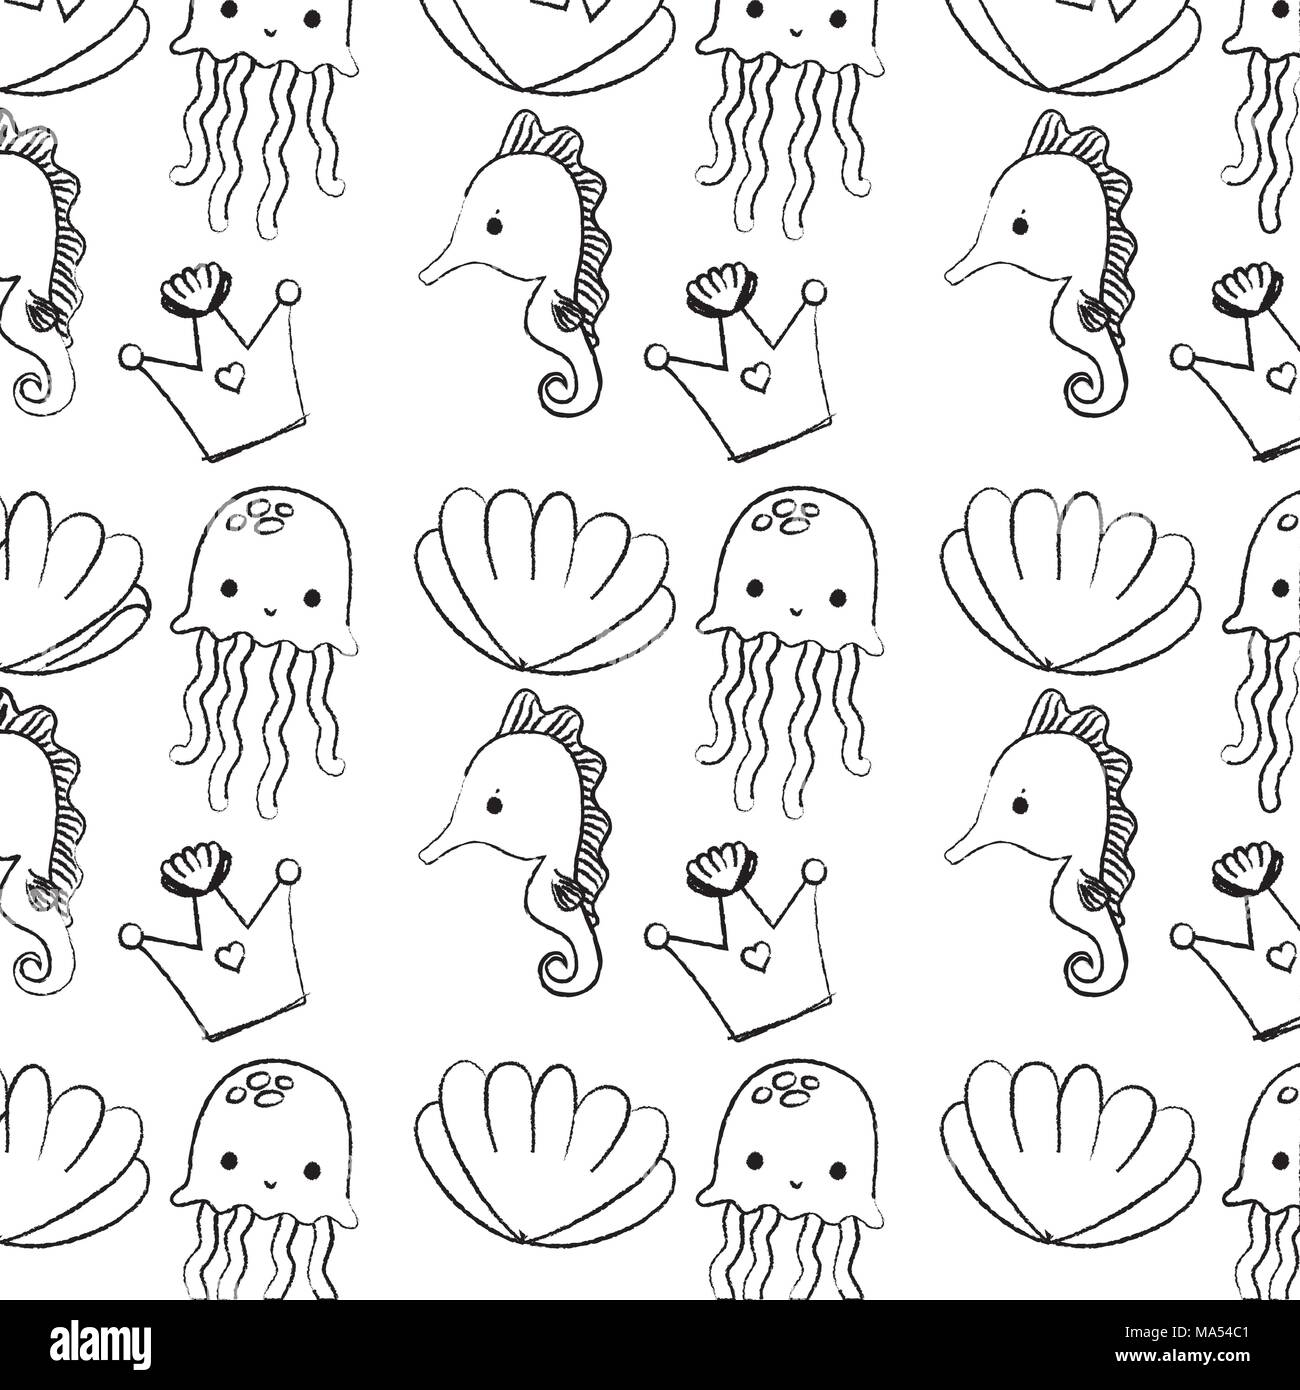 grunge uxury crown with marine animals background vector illustration Stock Vector